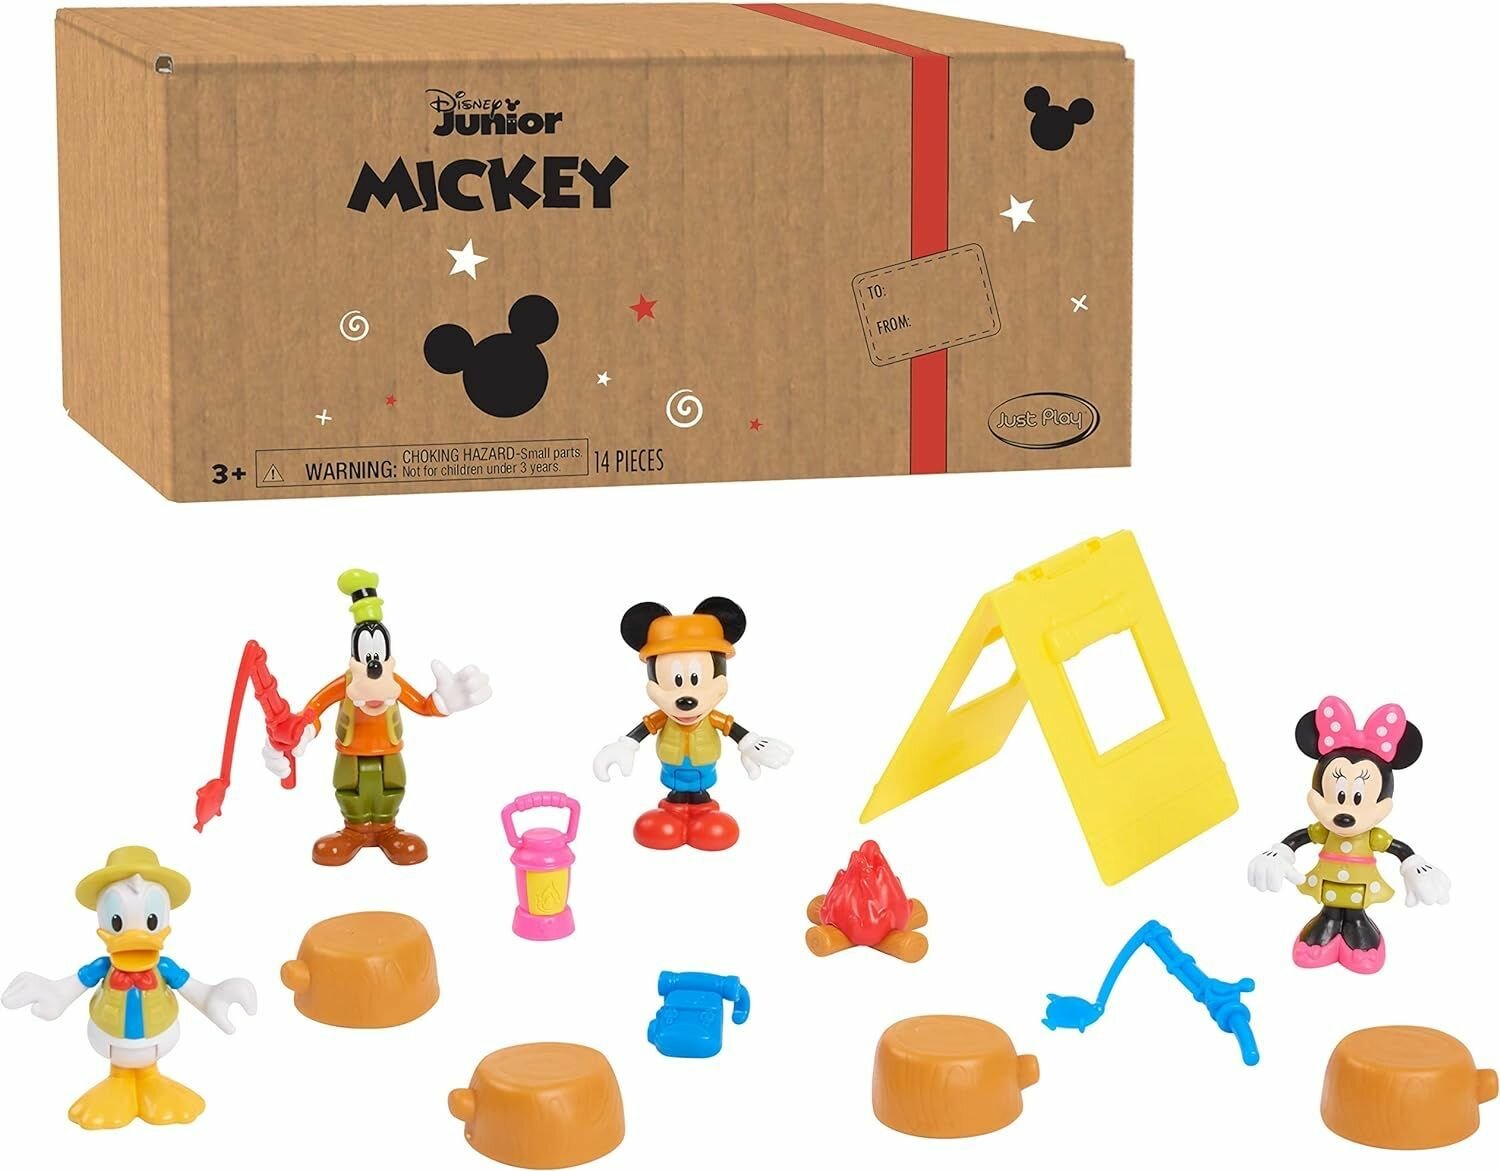 Микки Маус 14 коллекционных фигурок, Disney Mickey Mouse Camping Figure эксклюзив Just Play (Дисней)